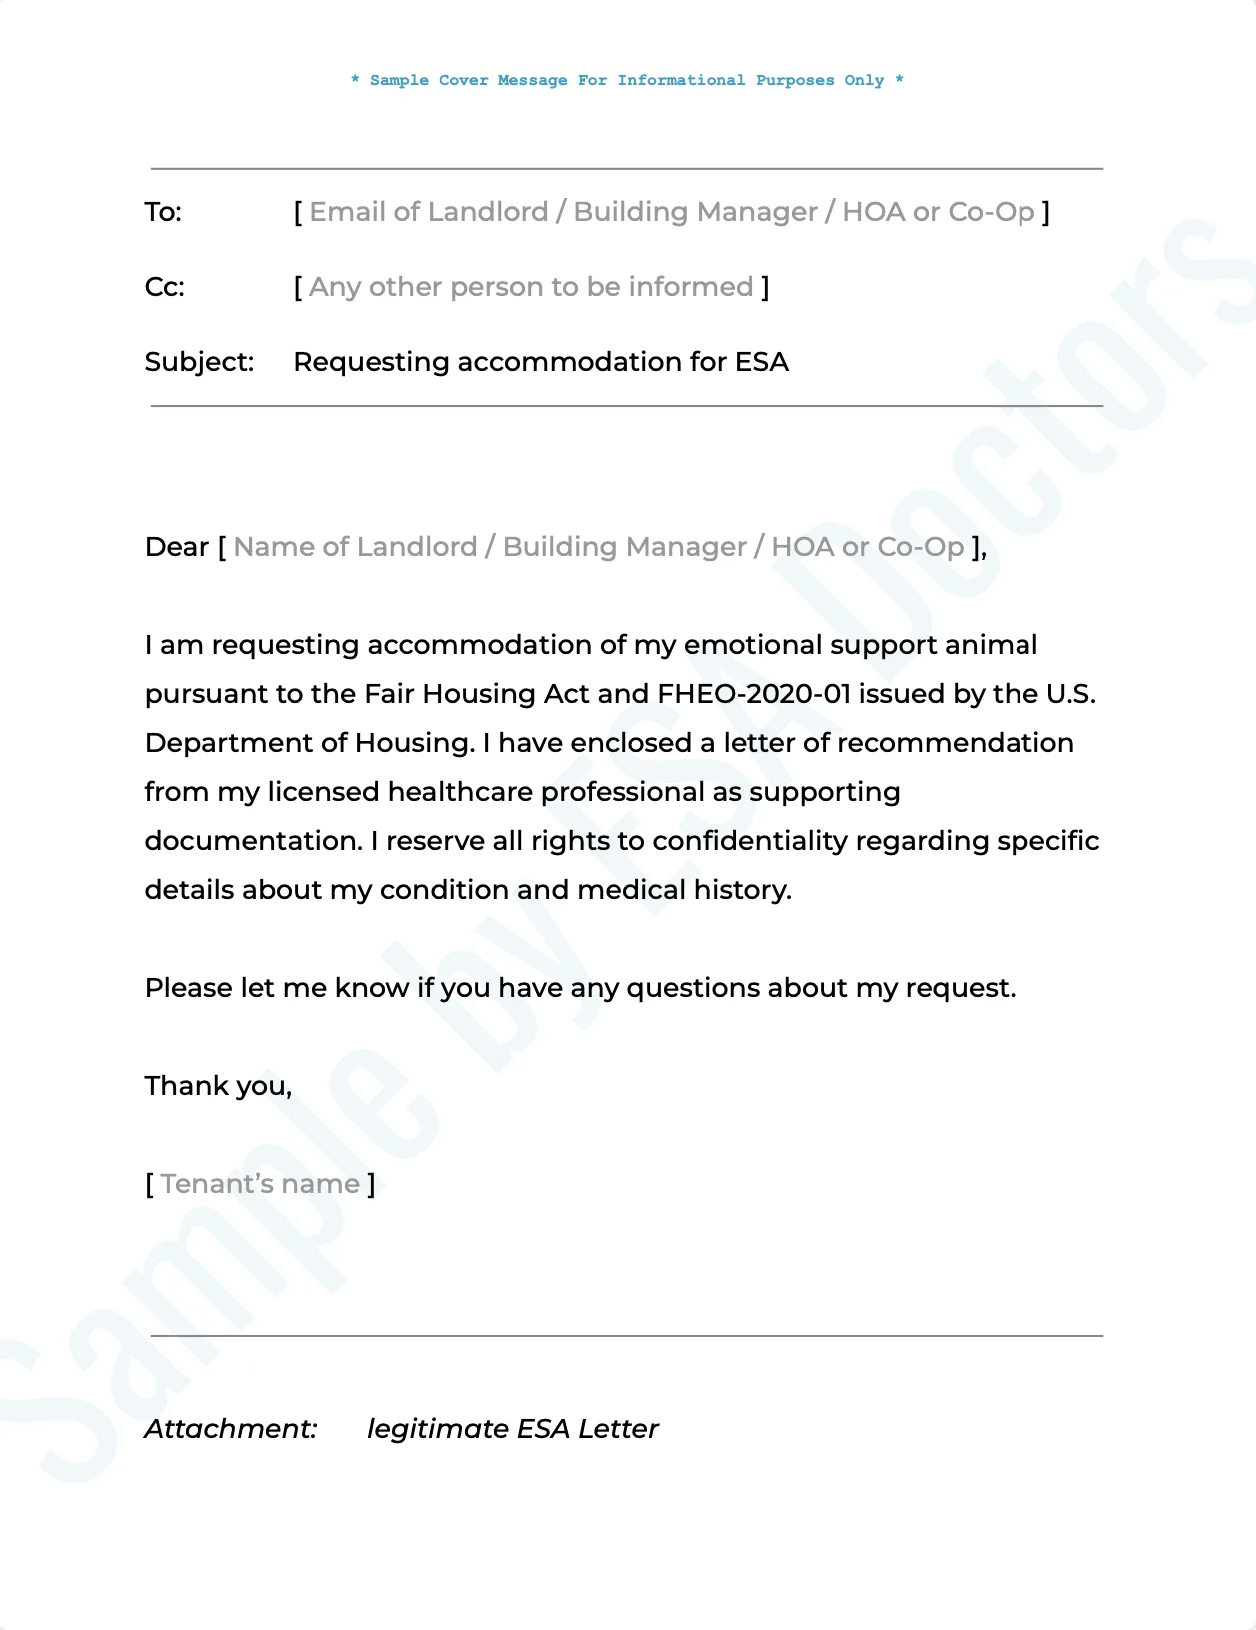 Cover message to landlord regarding ESA letter - Sample